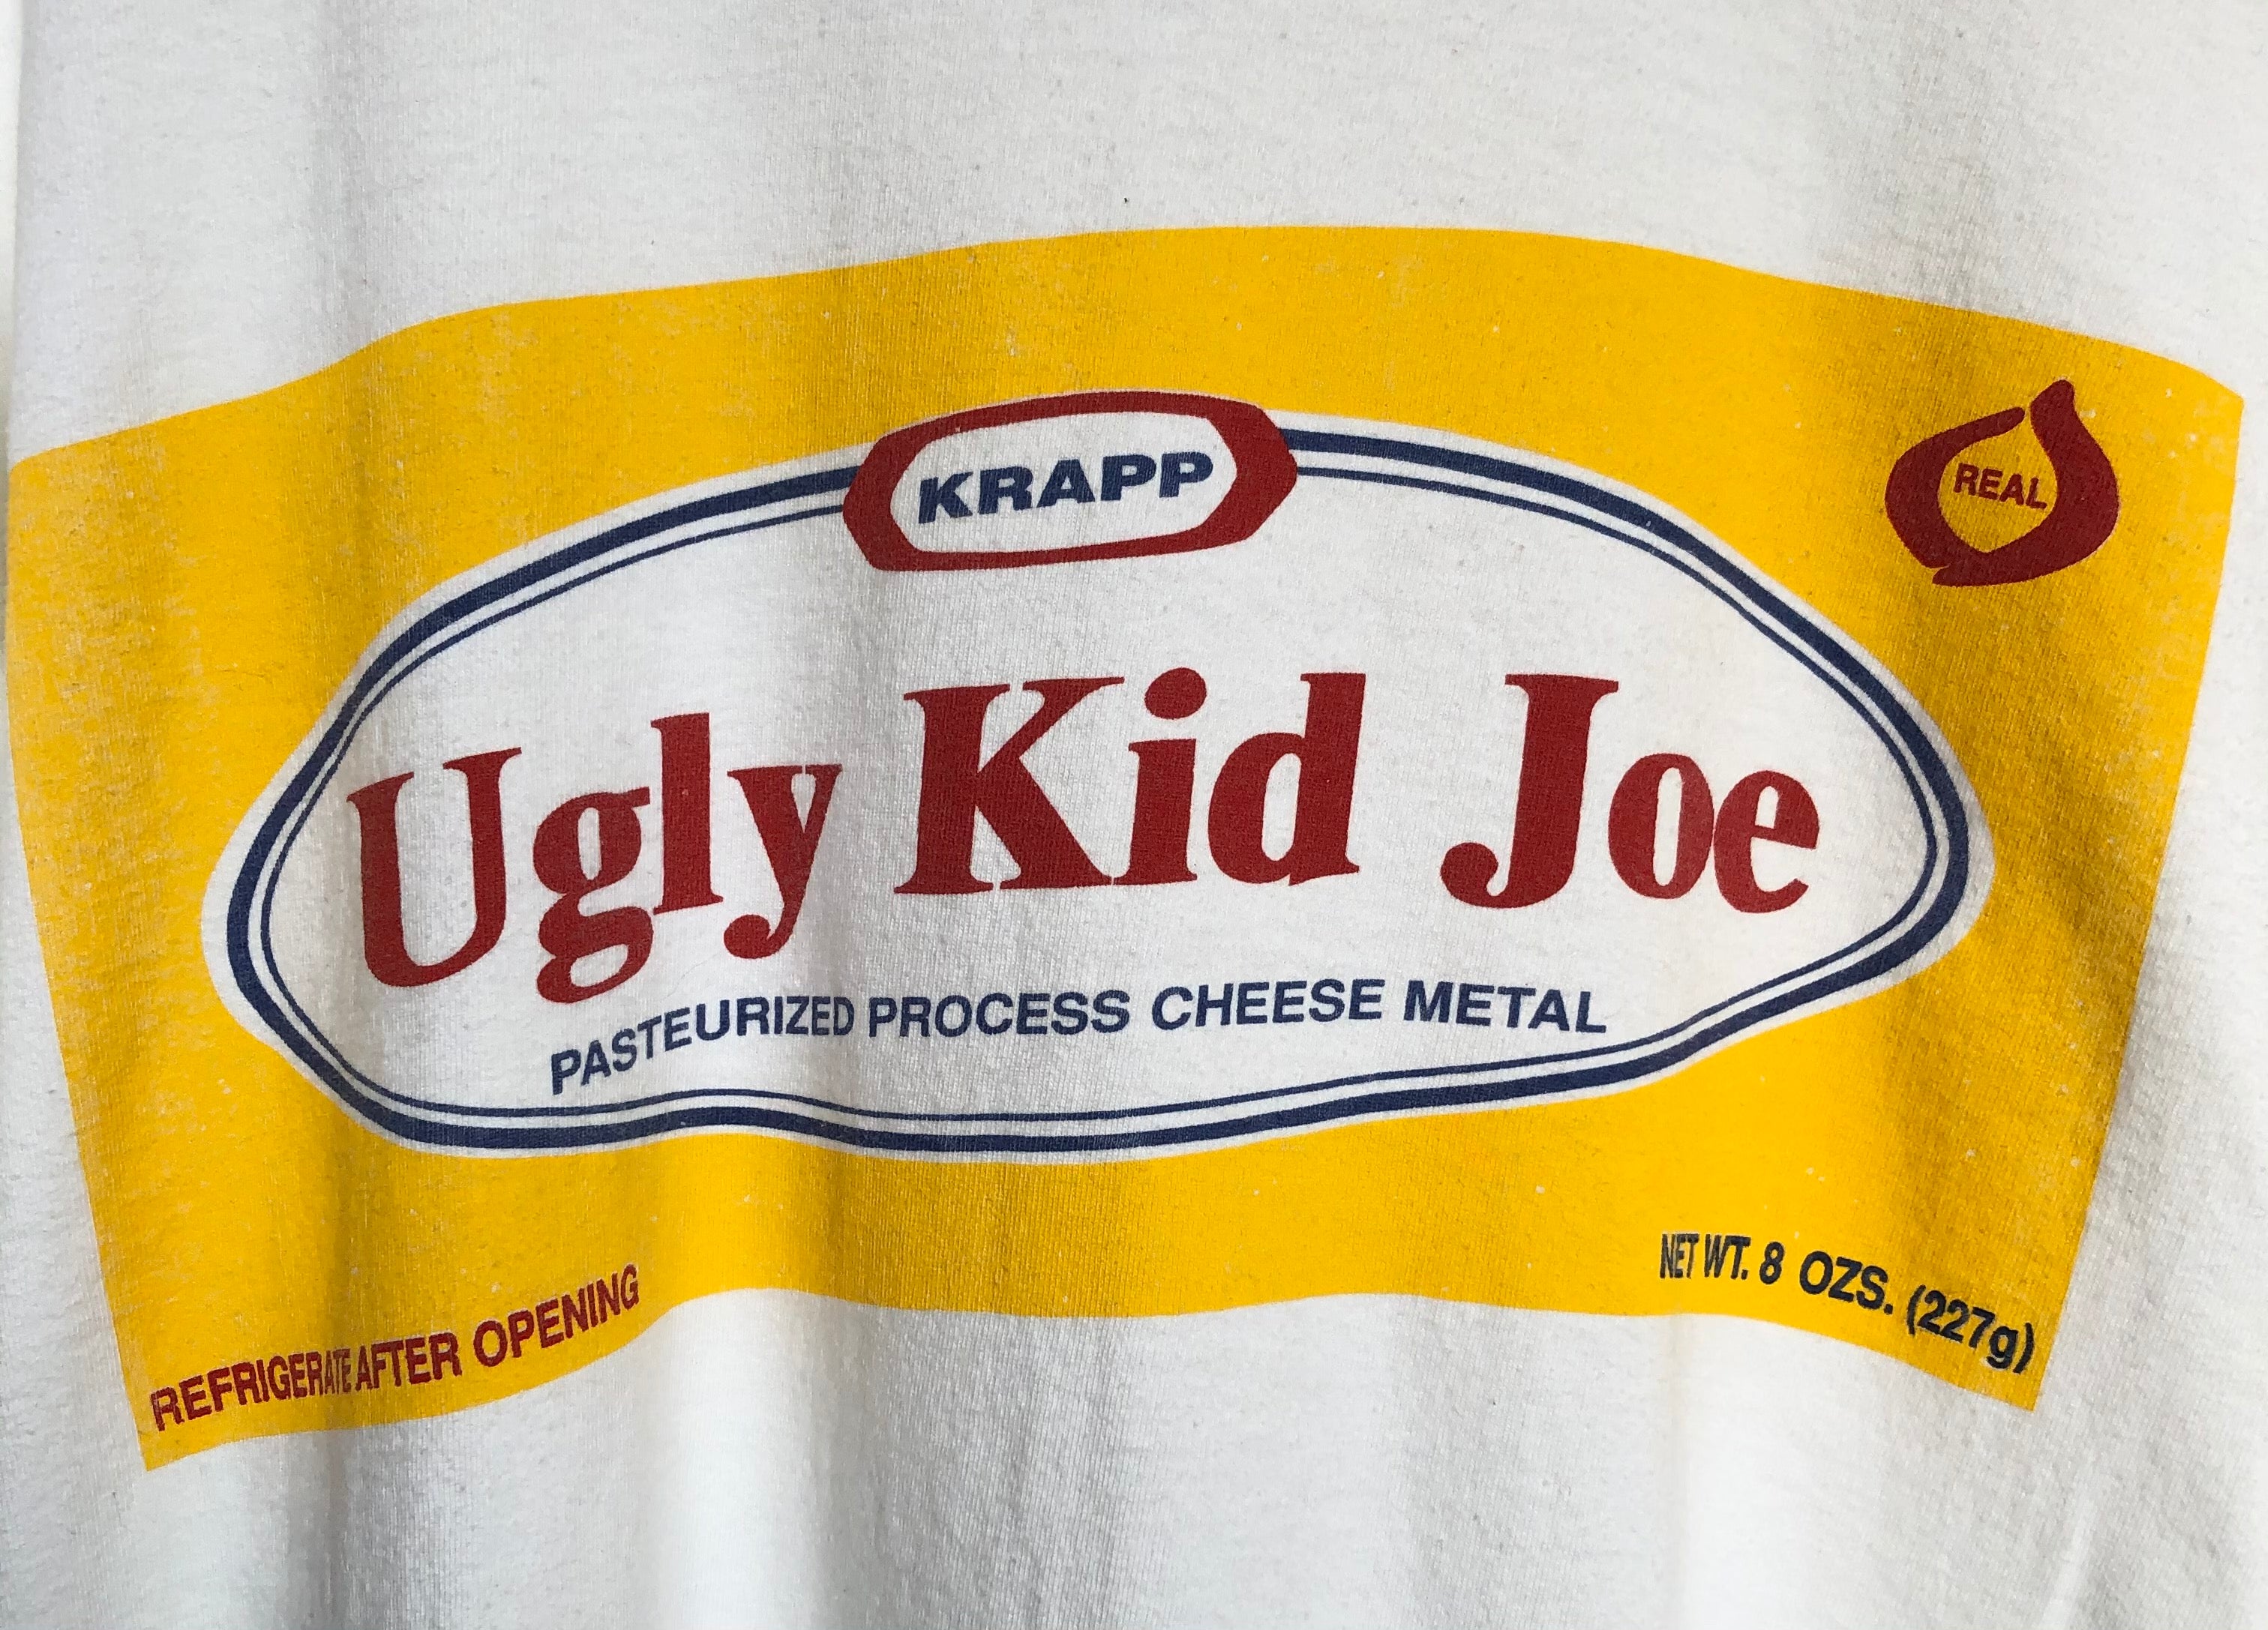 Rare 90's Ugly Kid Joe Band/Tour Tee – The Bowery Vault